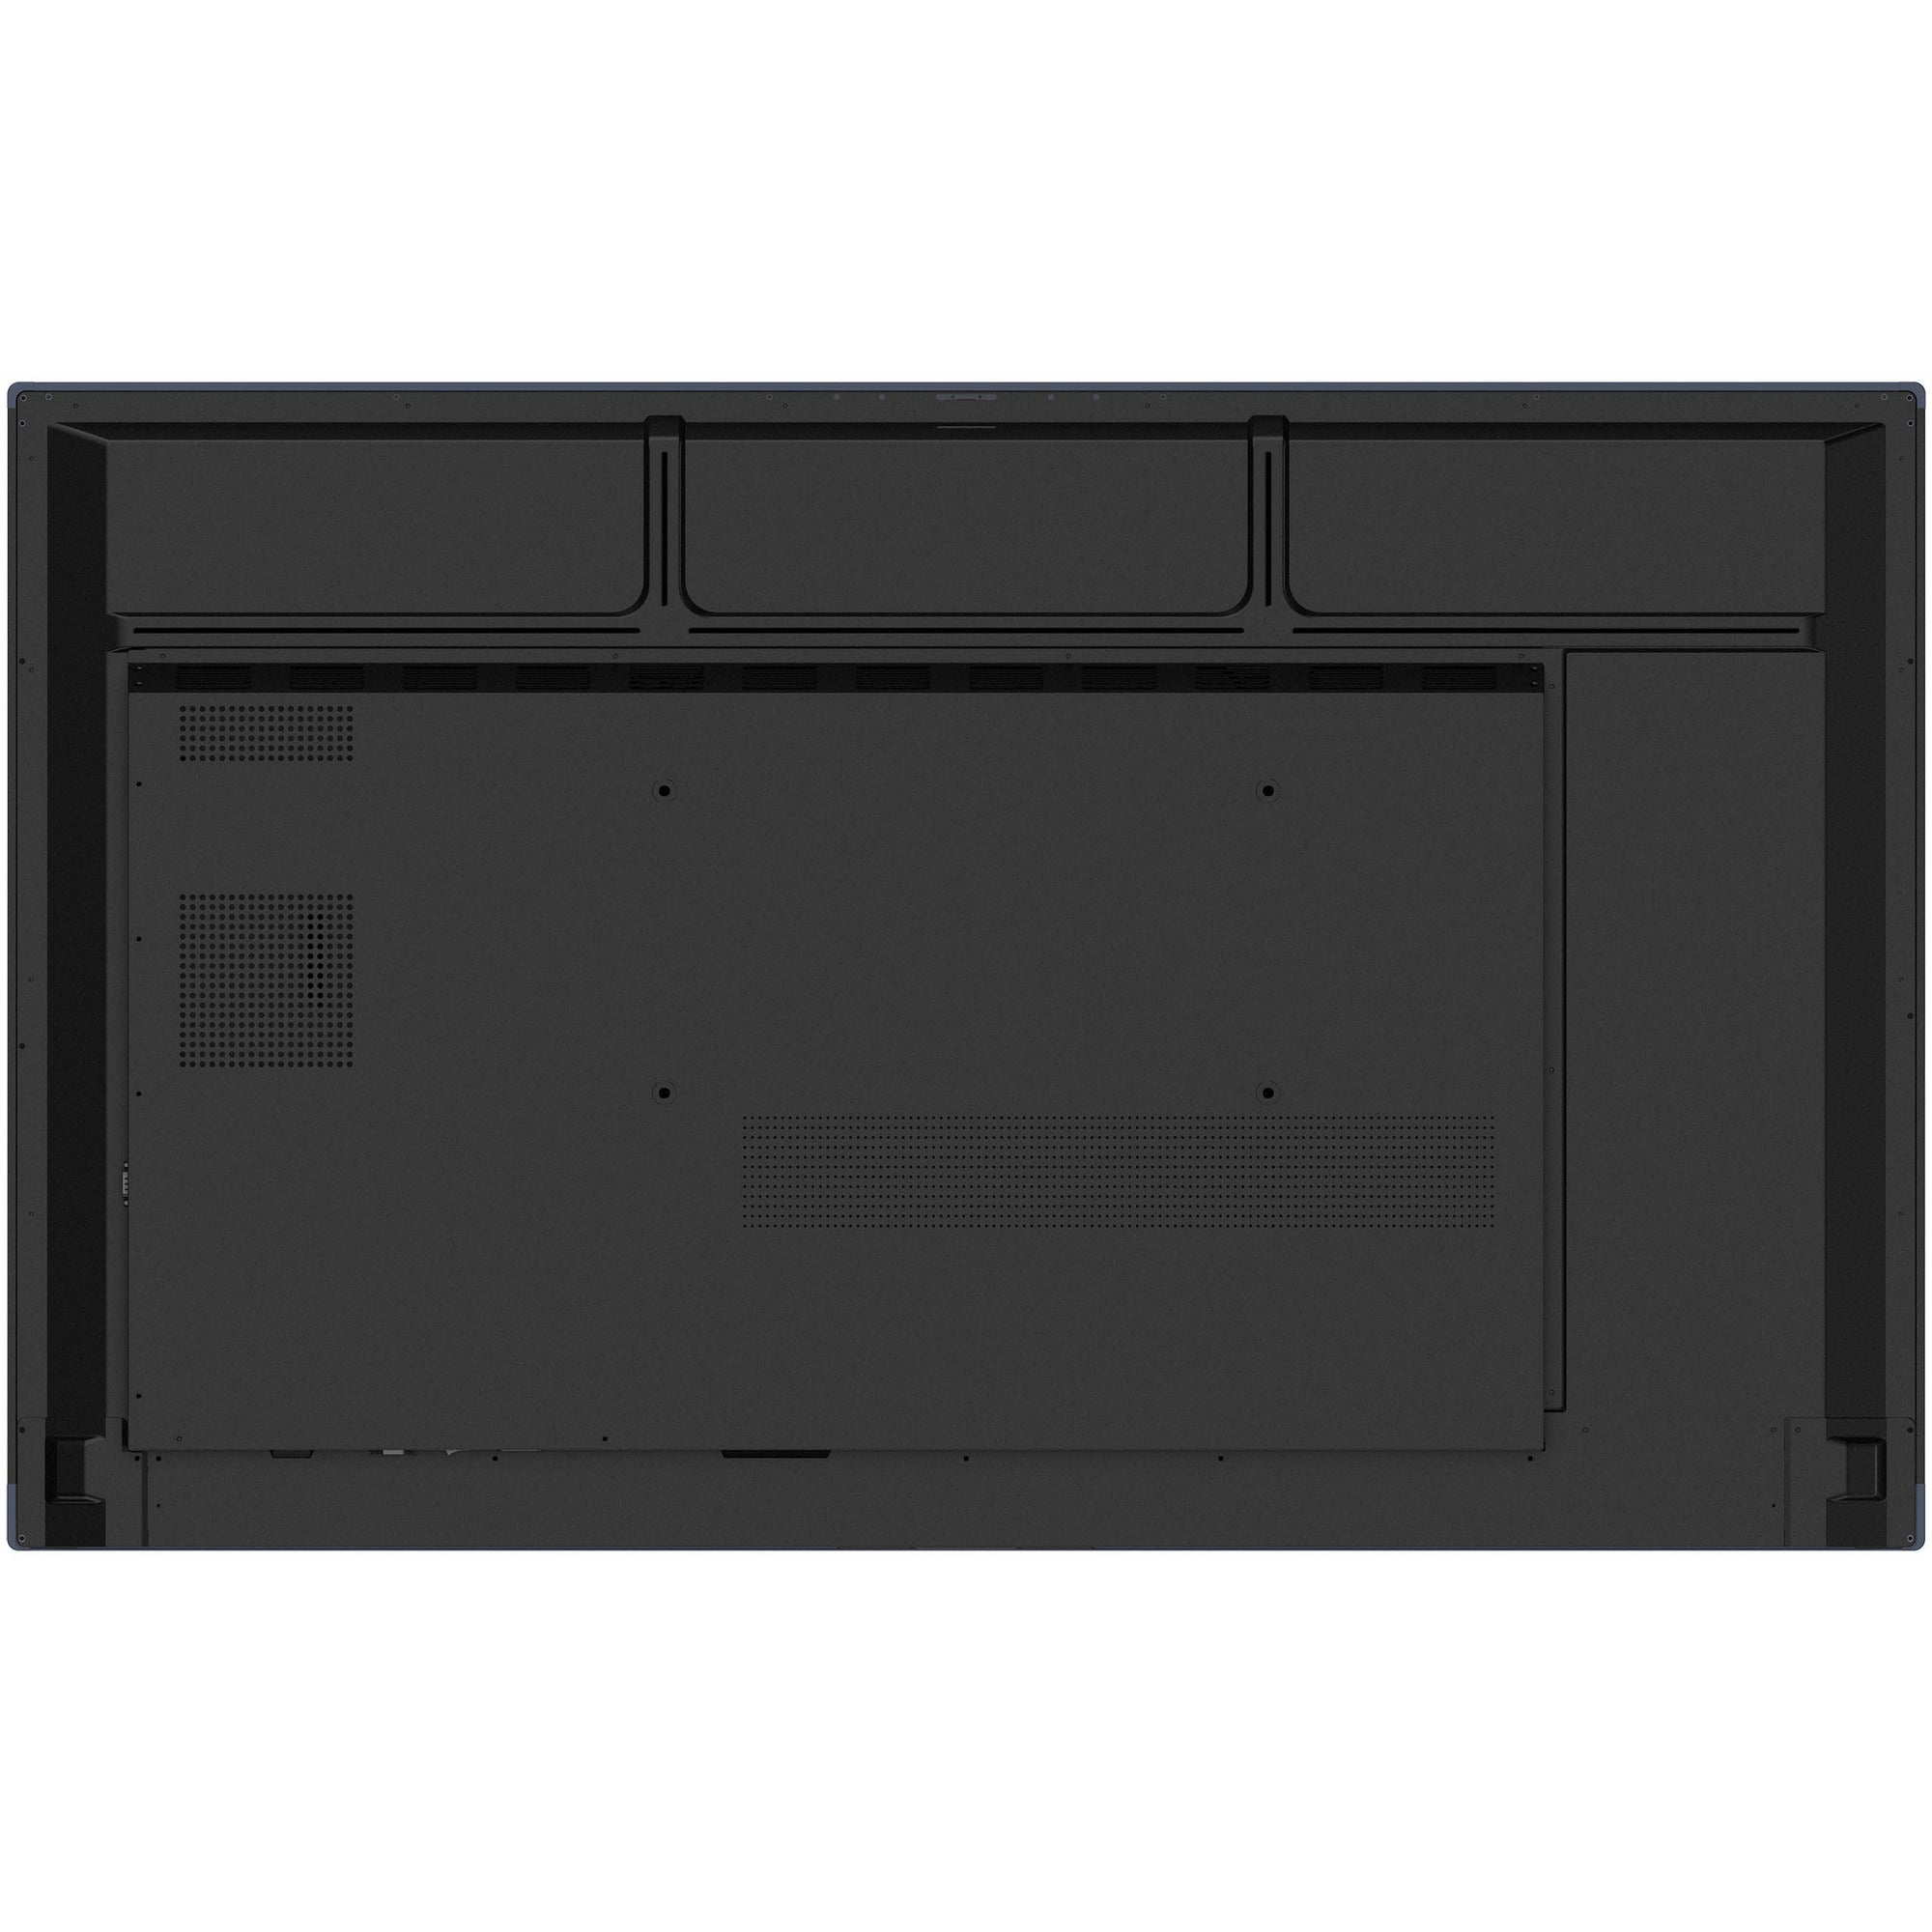 Iiyama ProLite TE5504MIS-B3AG 55’’ Interactive  4K UHD LCD Touchscreen with Integrated Whiteboard Software